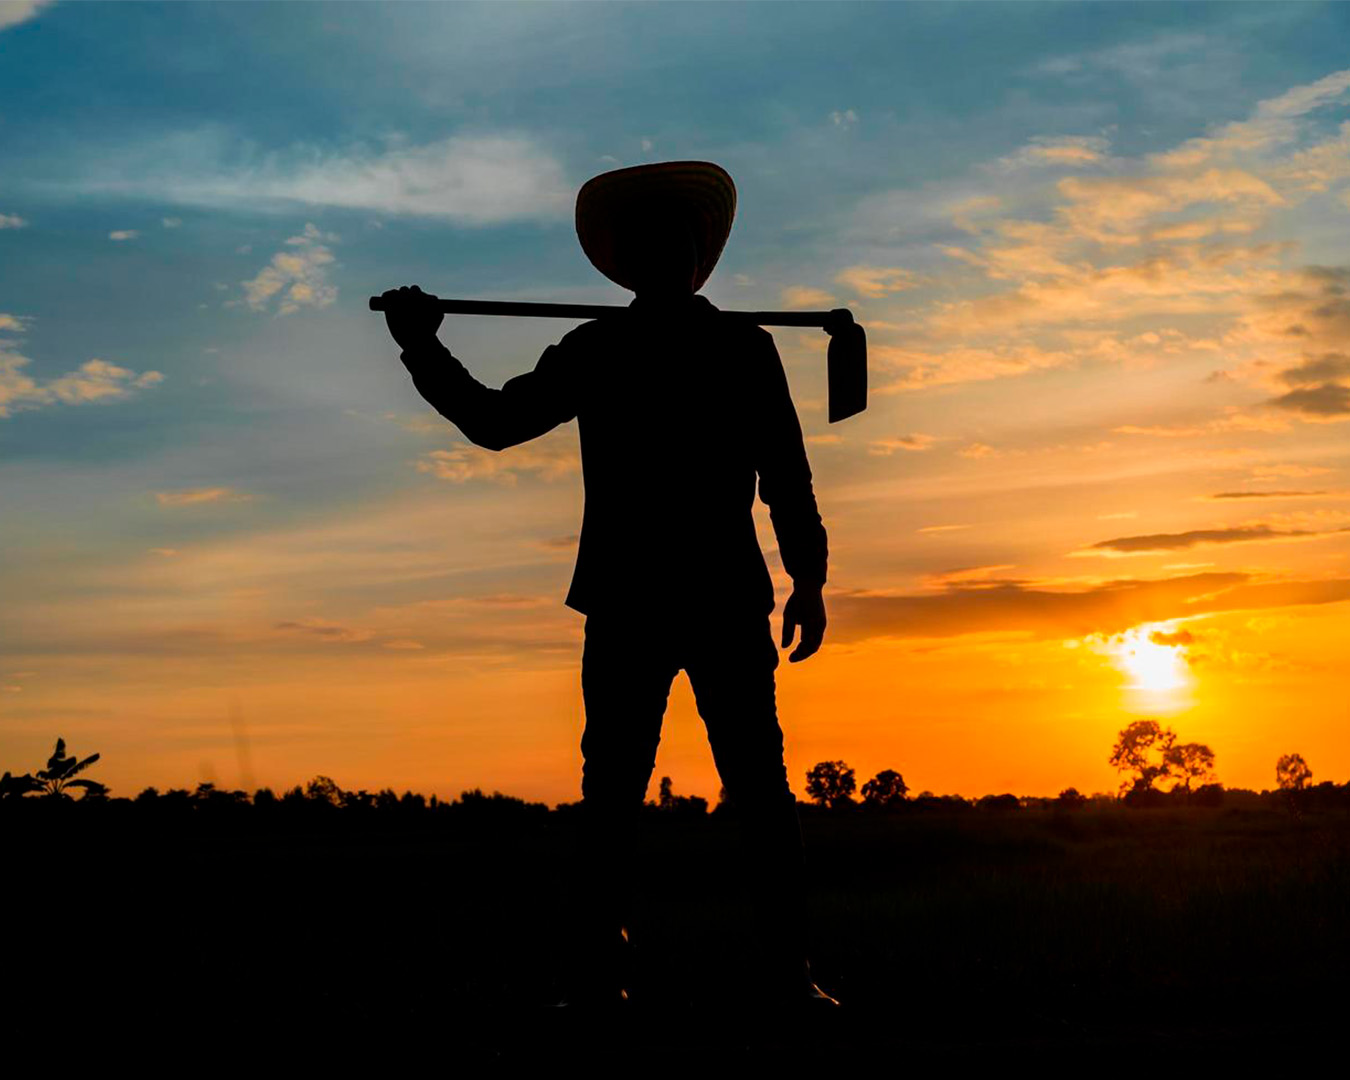 Agricultores de Mariano Moro podem solicitar protetor solar gratuito